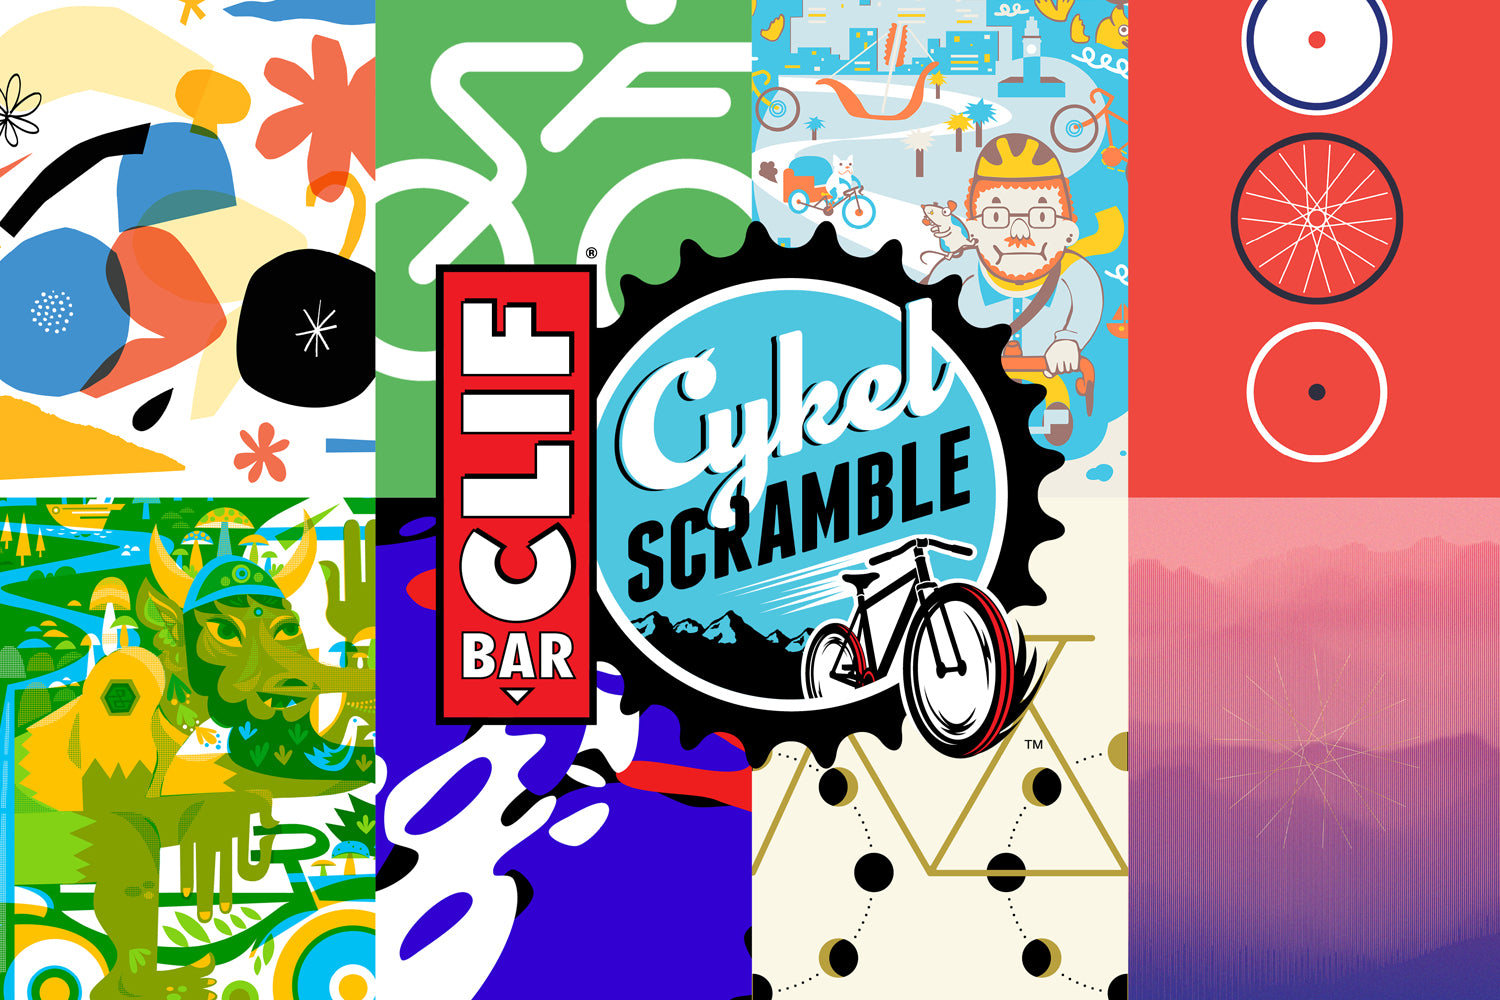 ARTCRANK brings bike art to Clif Bar's CykelScramble